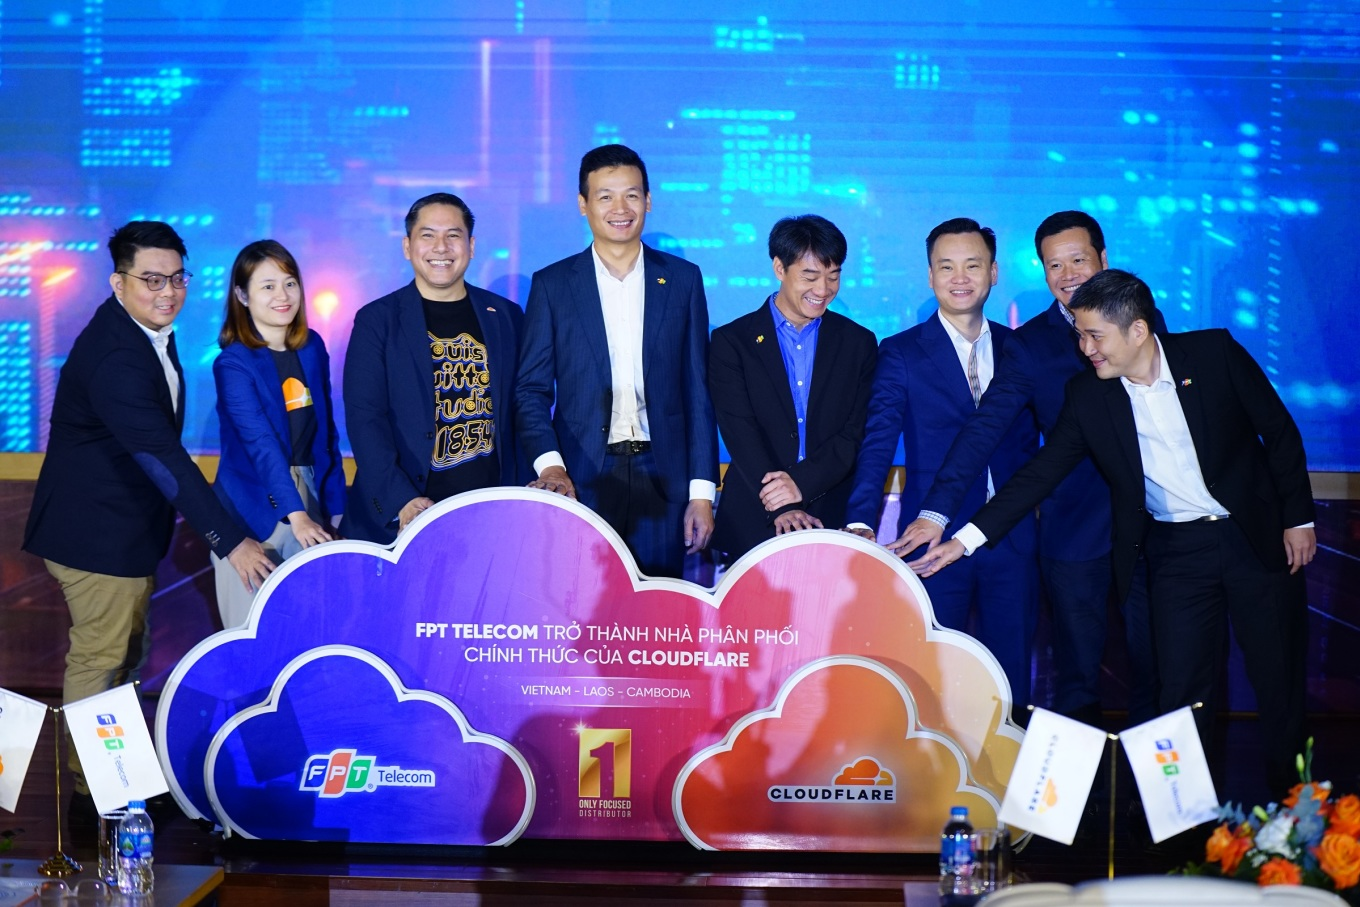 Представители FPT Telecom и Cloudflare на торжественном мероприятии в Ханое, 5 сентября. Фото предоставлено FPT Telecom.